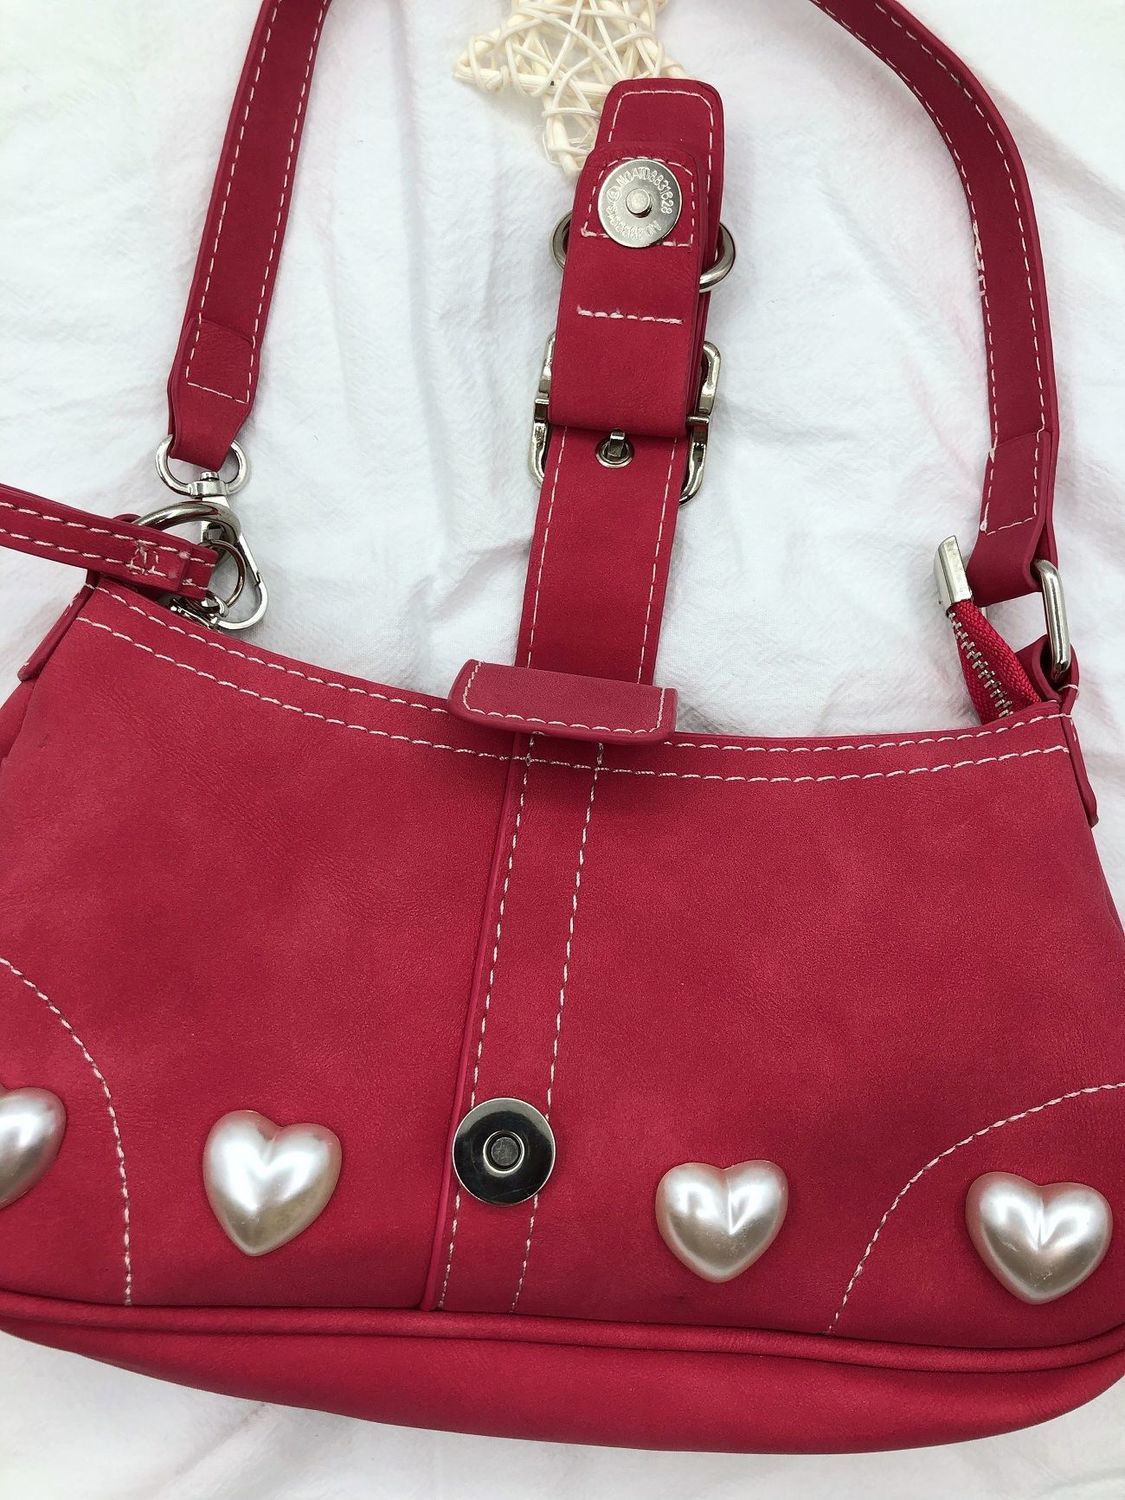 Princess Pink Heart Bag – Pinky Dollz